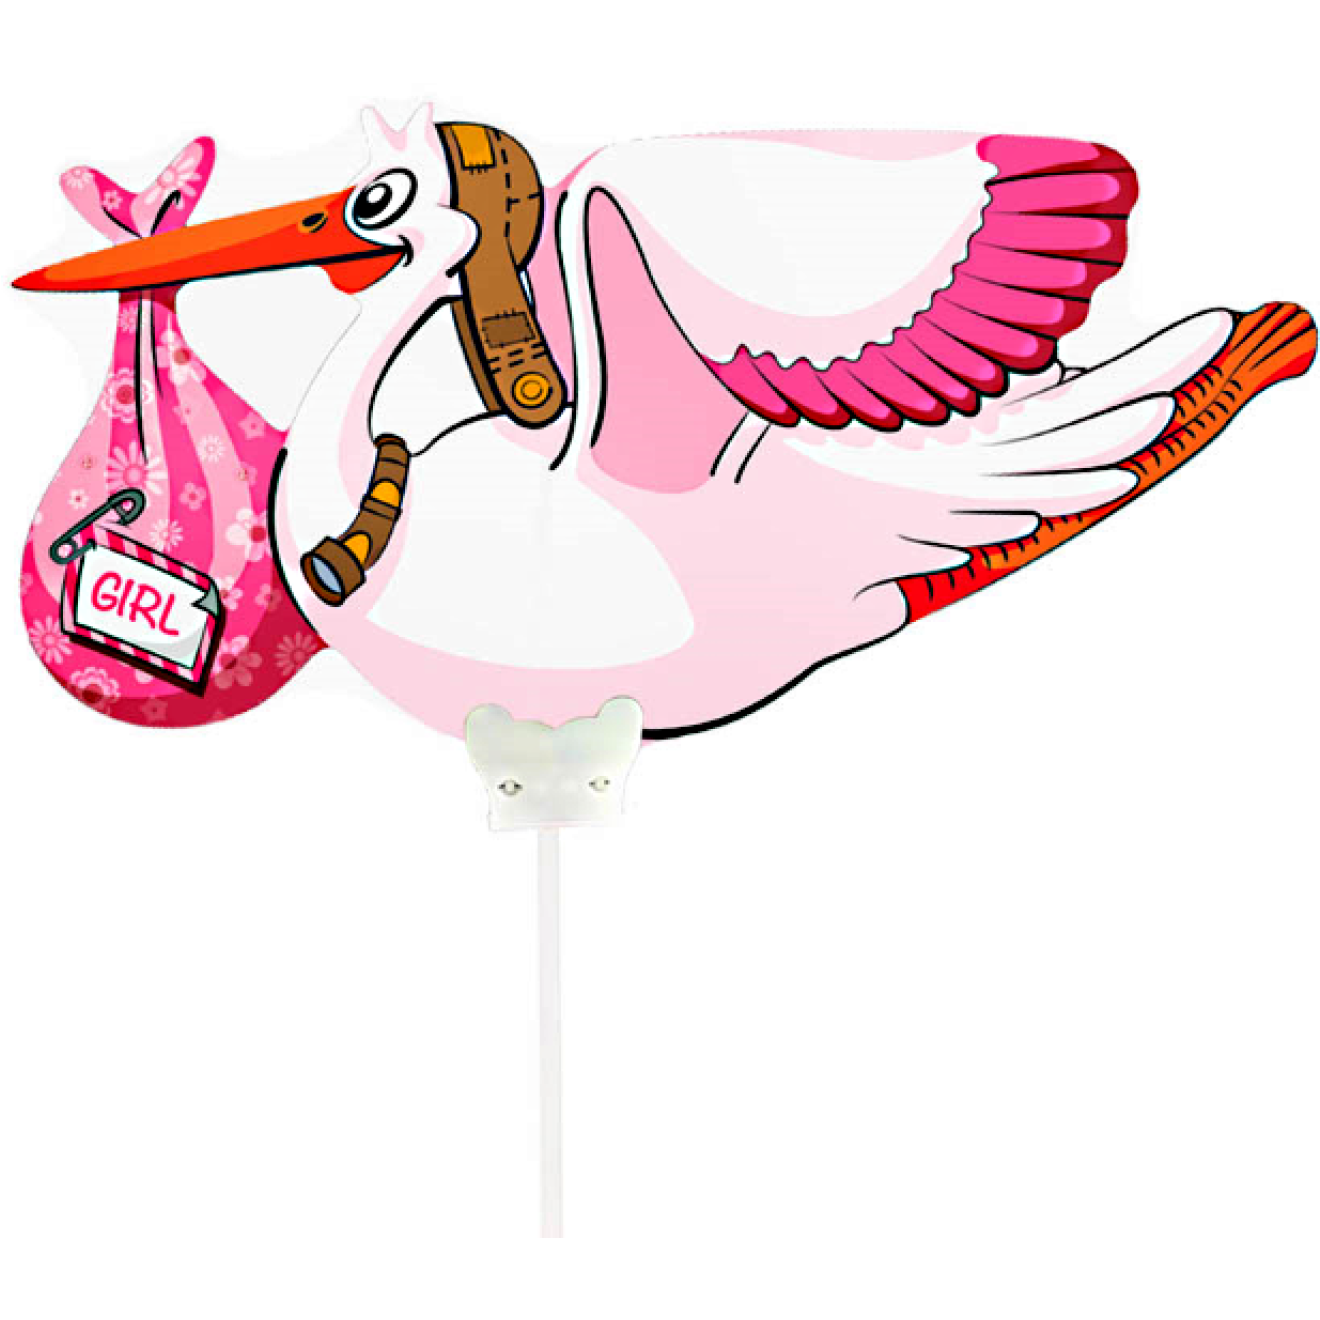 Storch Mädchen (Girl) - Folienballon mit Haltestab